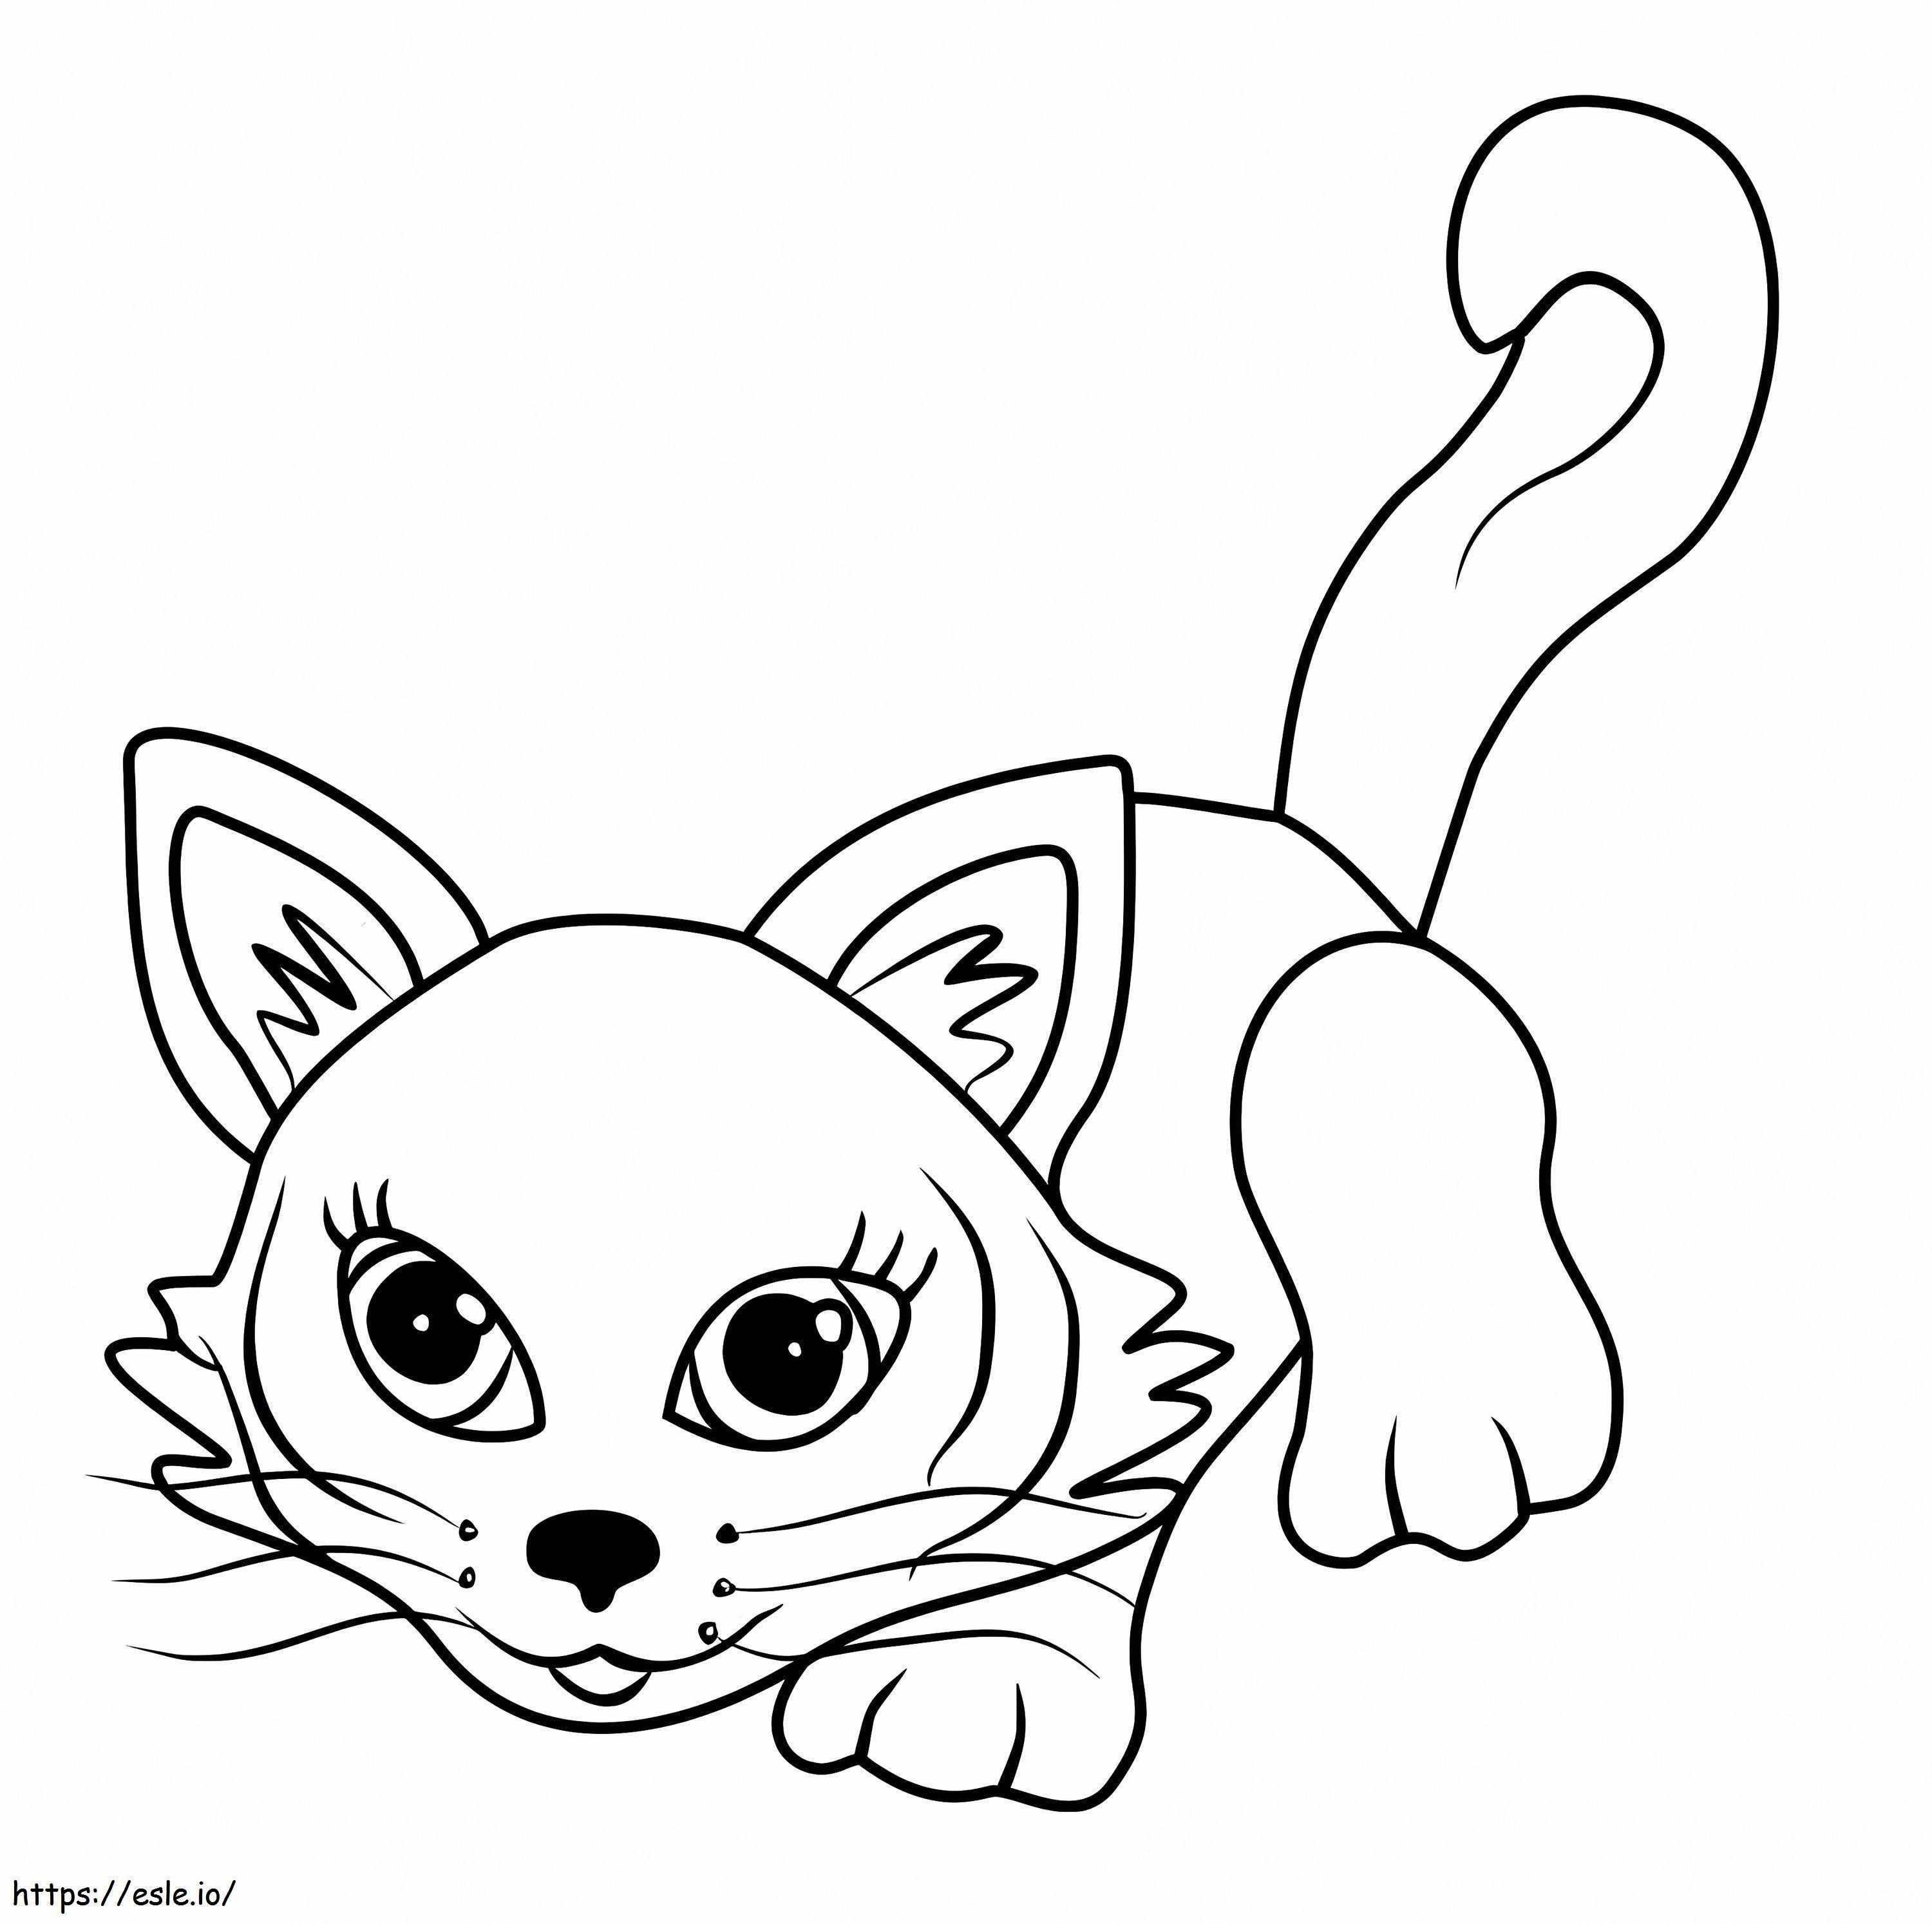 Siberian Pet Parade coloring page